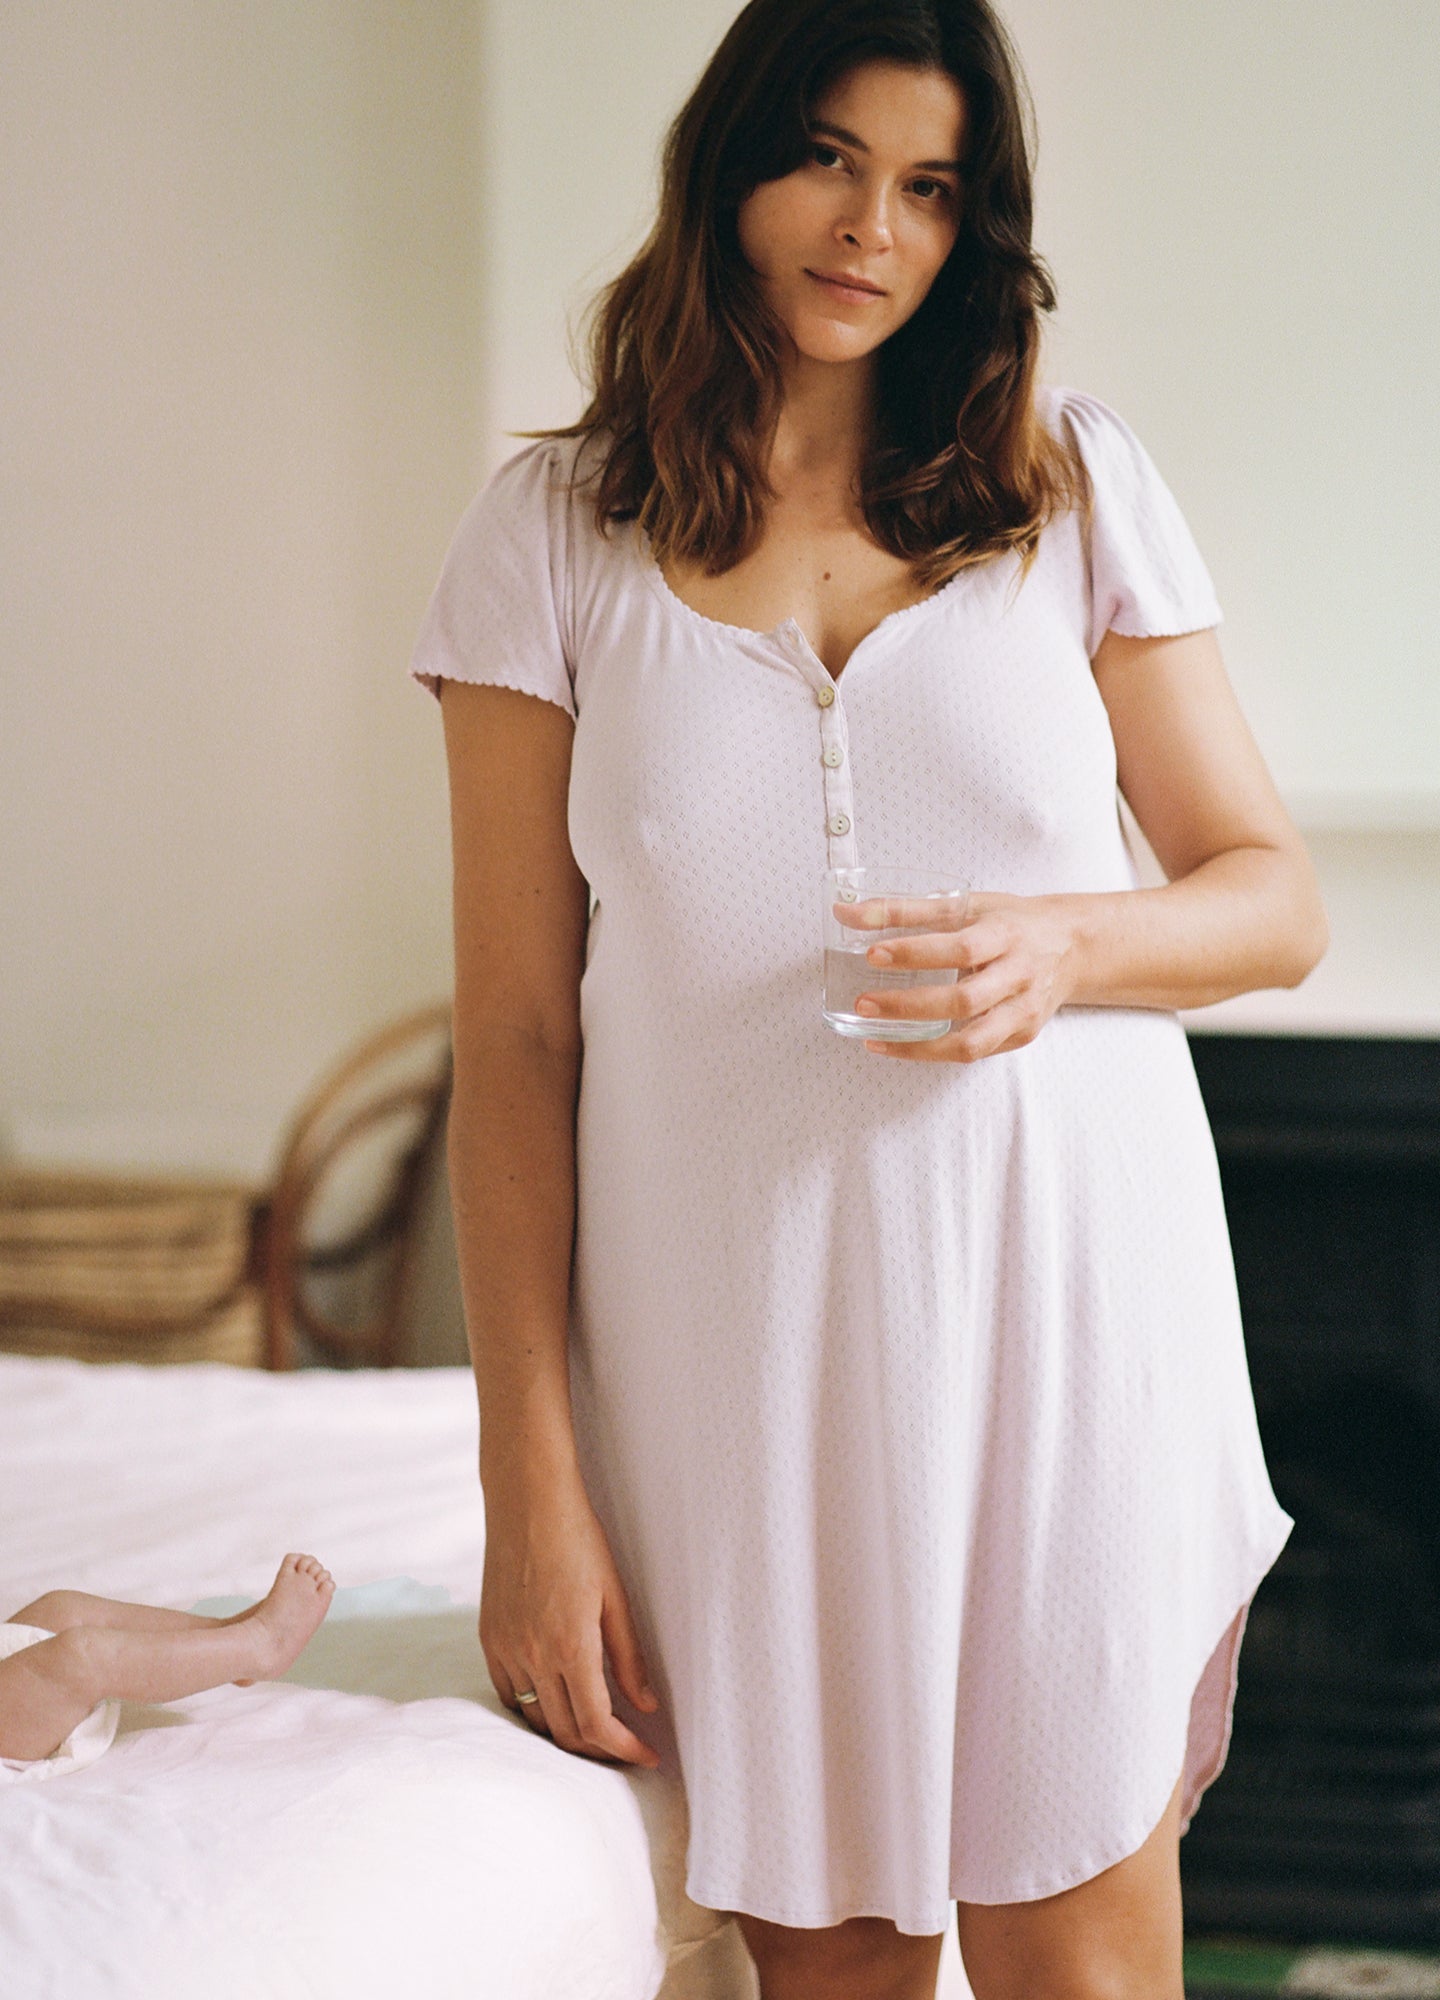 Pregnant woman wearing maternity pajamas